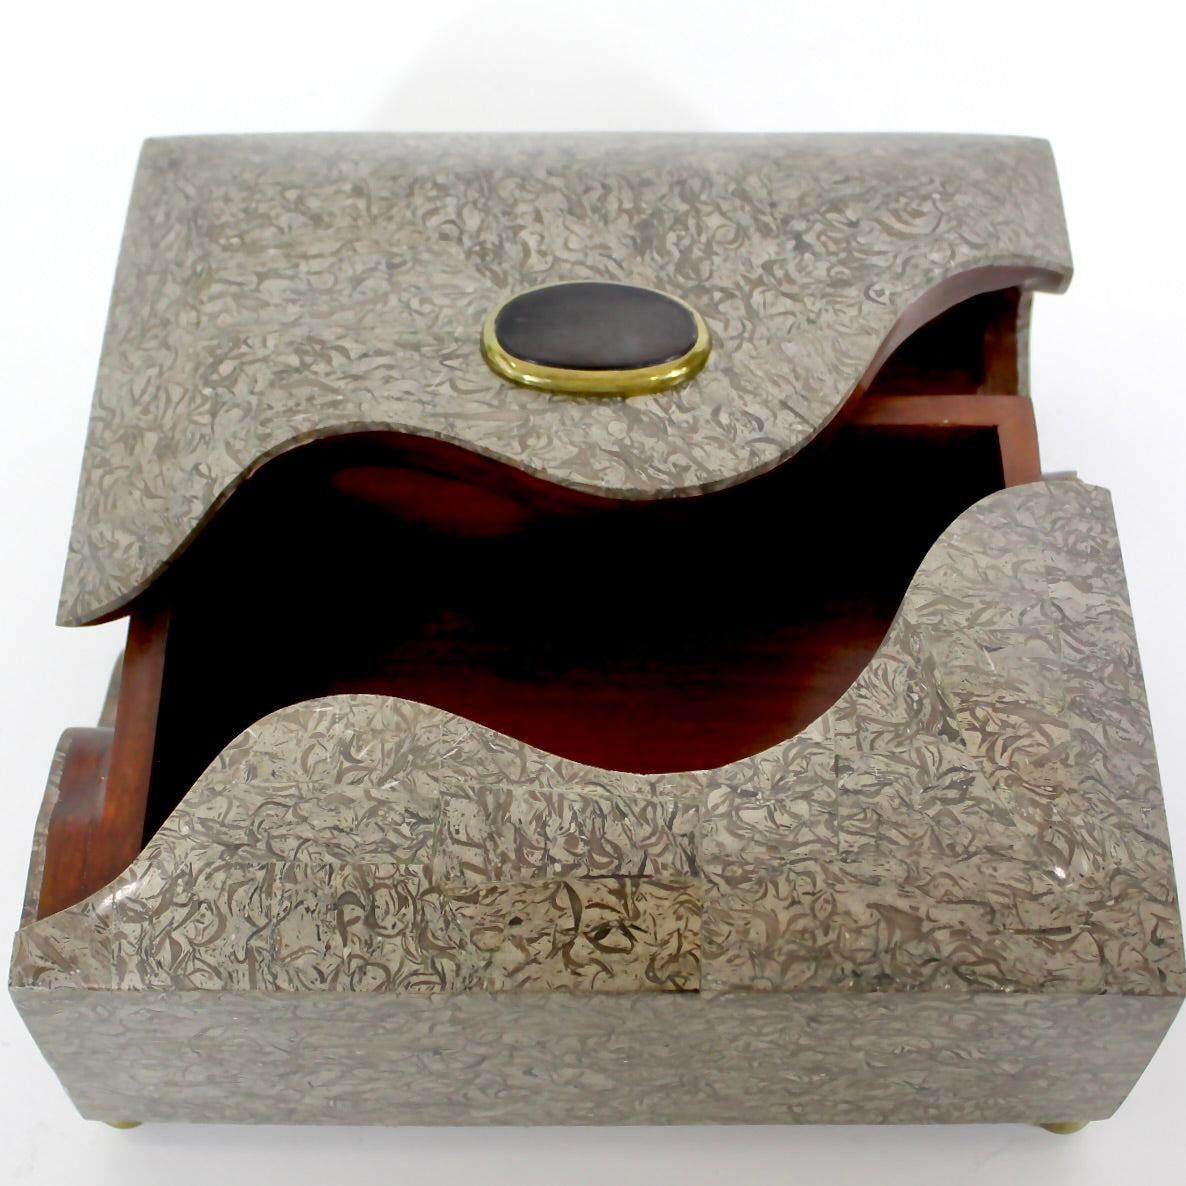 Rosewood Personal Storage Box | Tessellated Stone, Jewelry box, makeup box, cufflink box, knickknack holder.